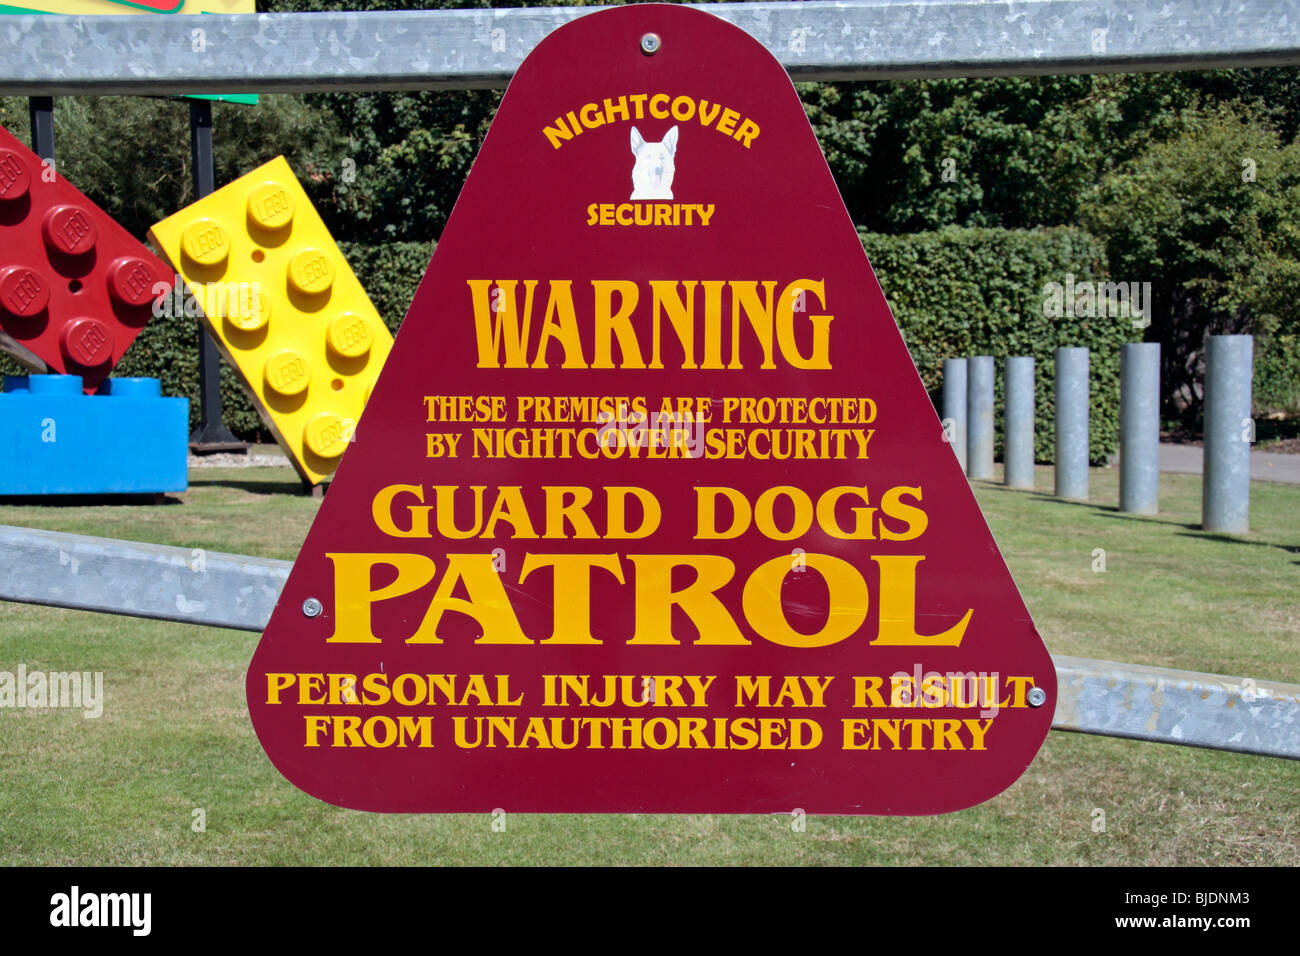 A Guard Dog Patrol warning sign at the Legoland Park near Windsor, UK. Stock Photo